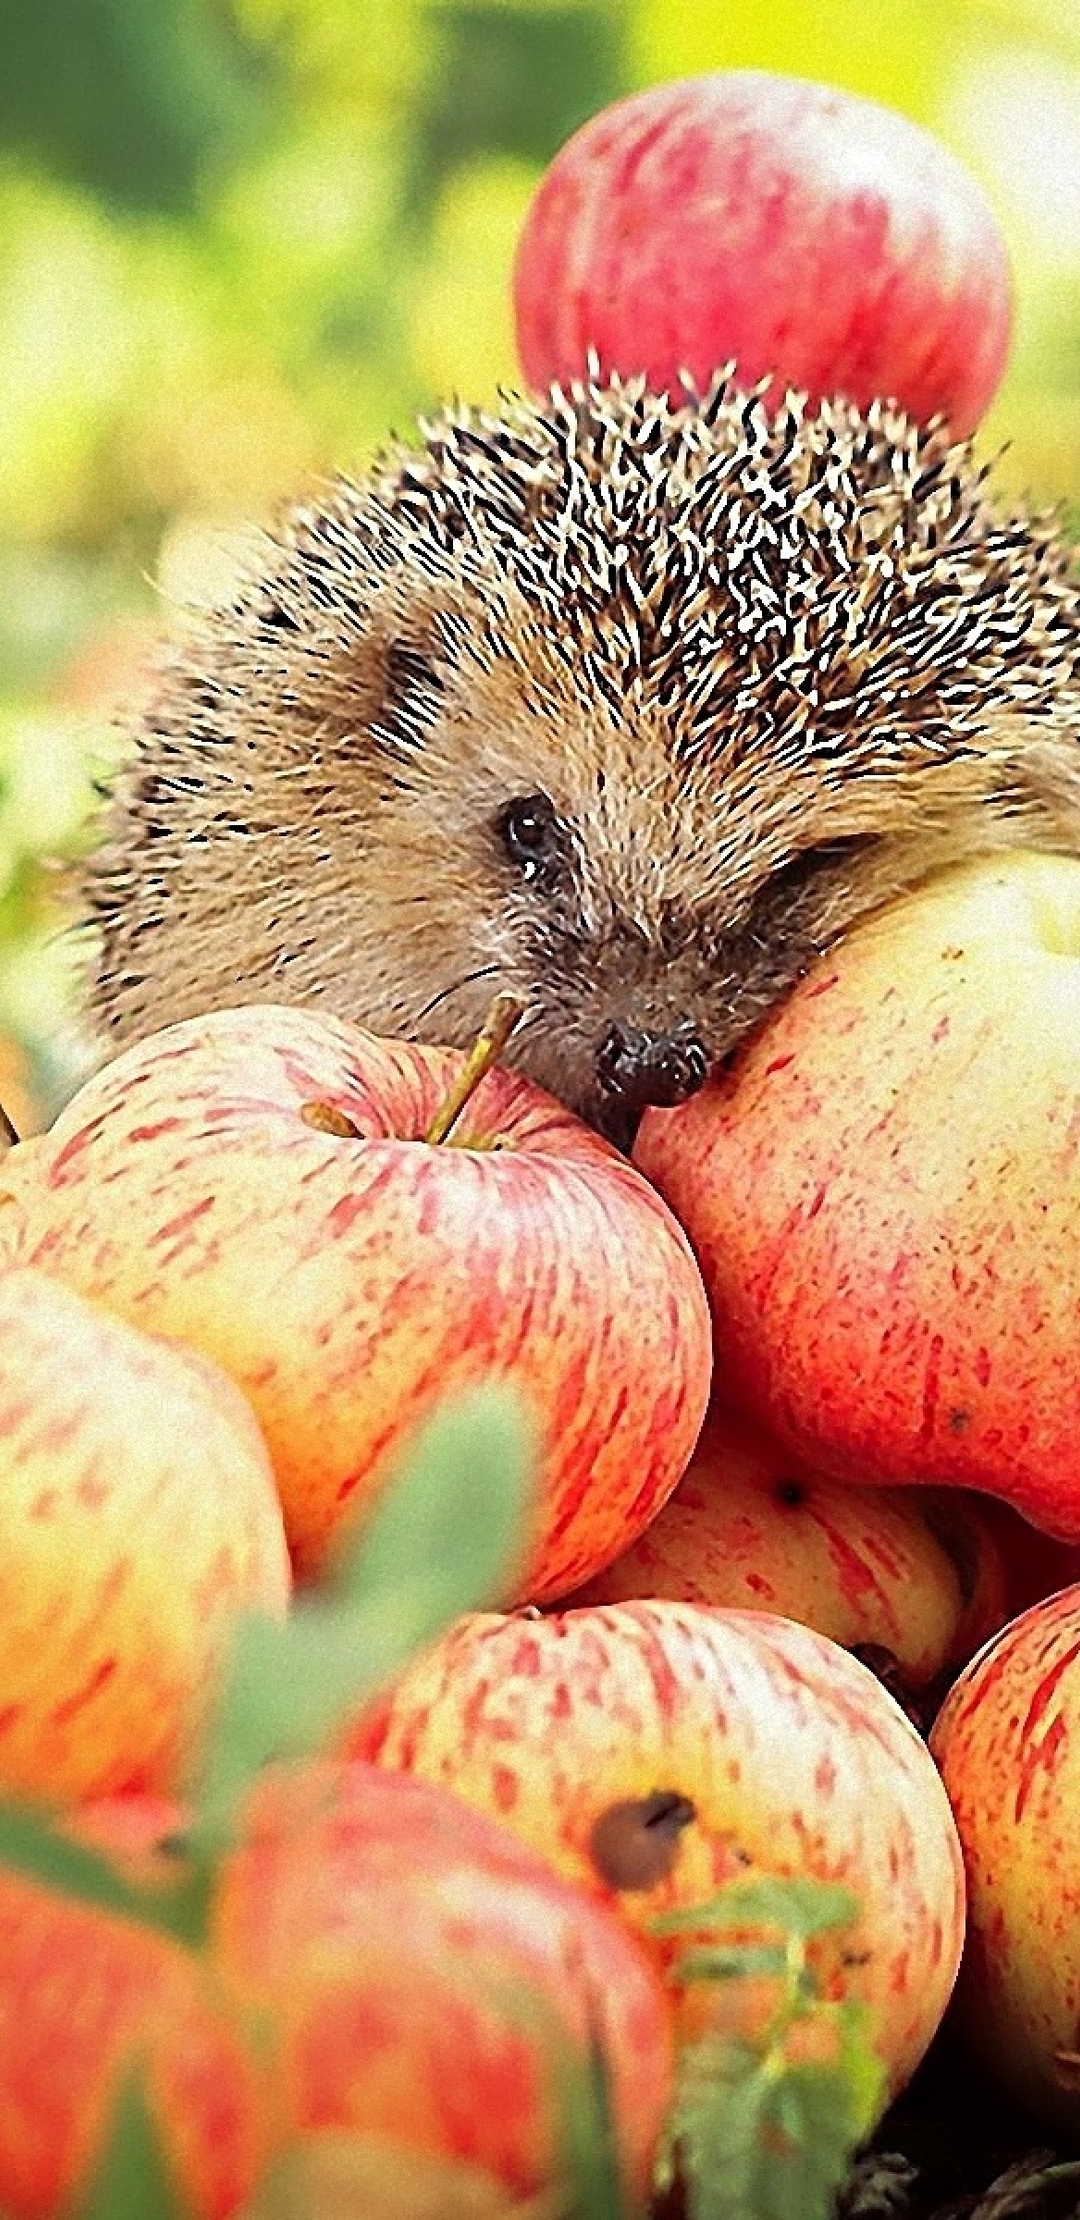 Image: Hedgehog, eyes, needles, muzzle, apples, harvest, leaves